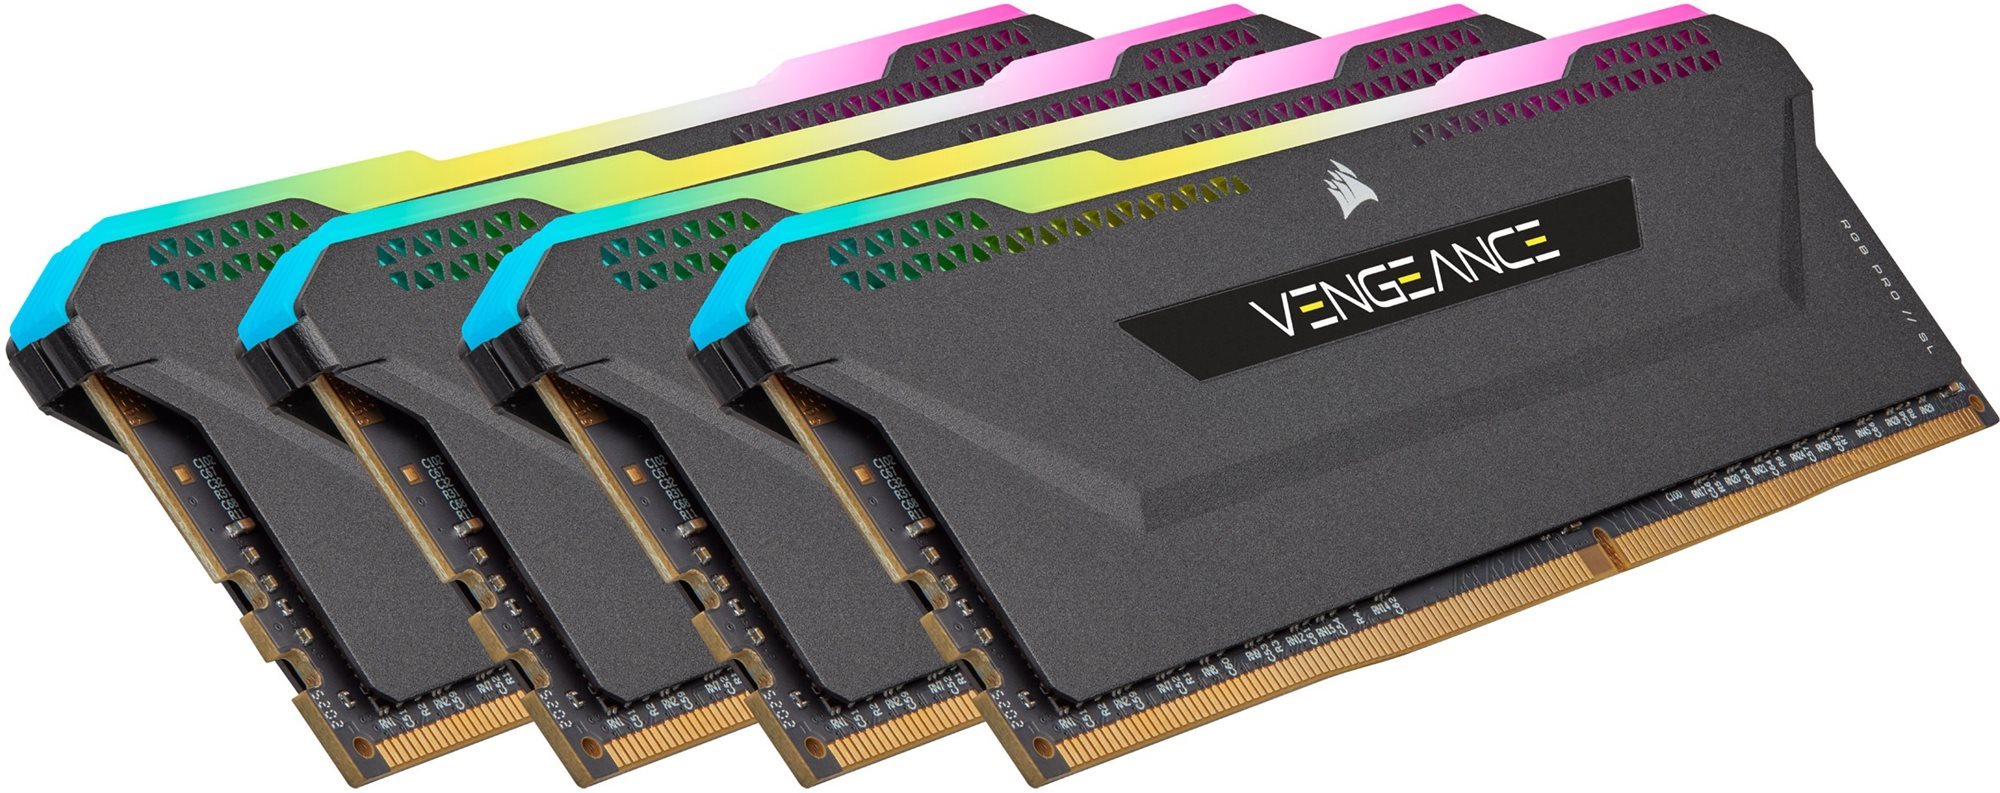 RAM memória Corsair 128GB KIT DDR4 3200MHz CL16 VENGEANCE RGB PRO SL Black